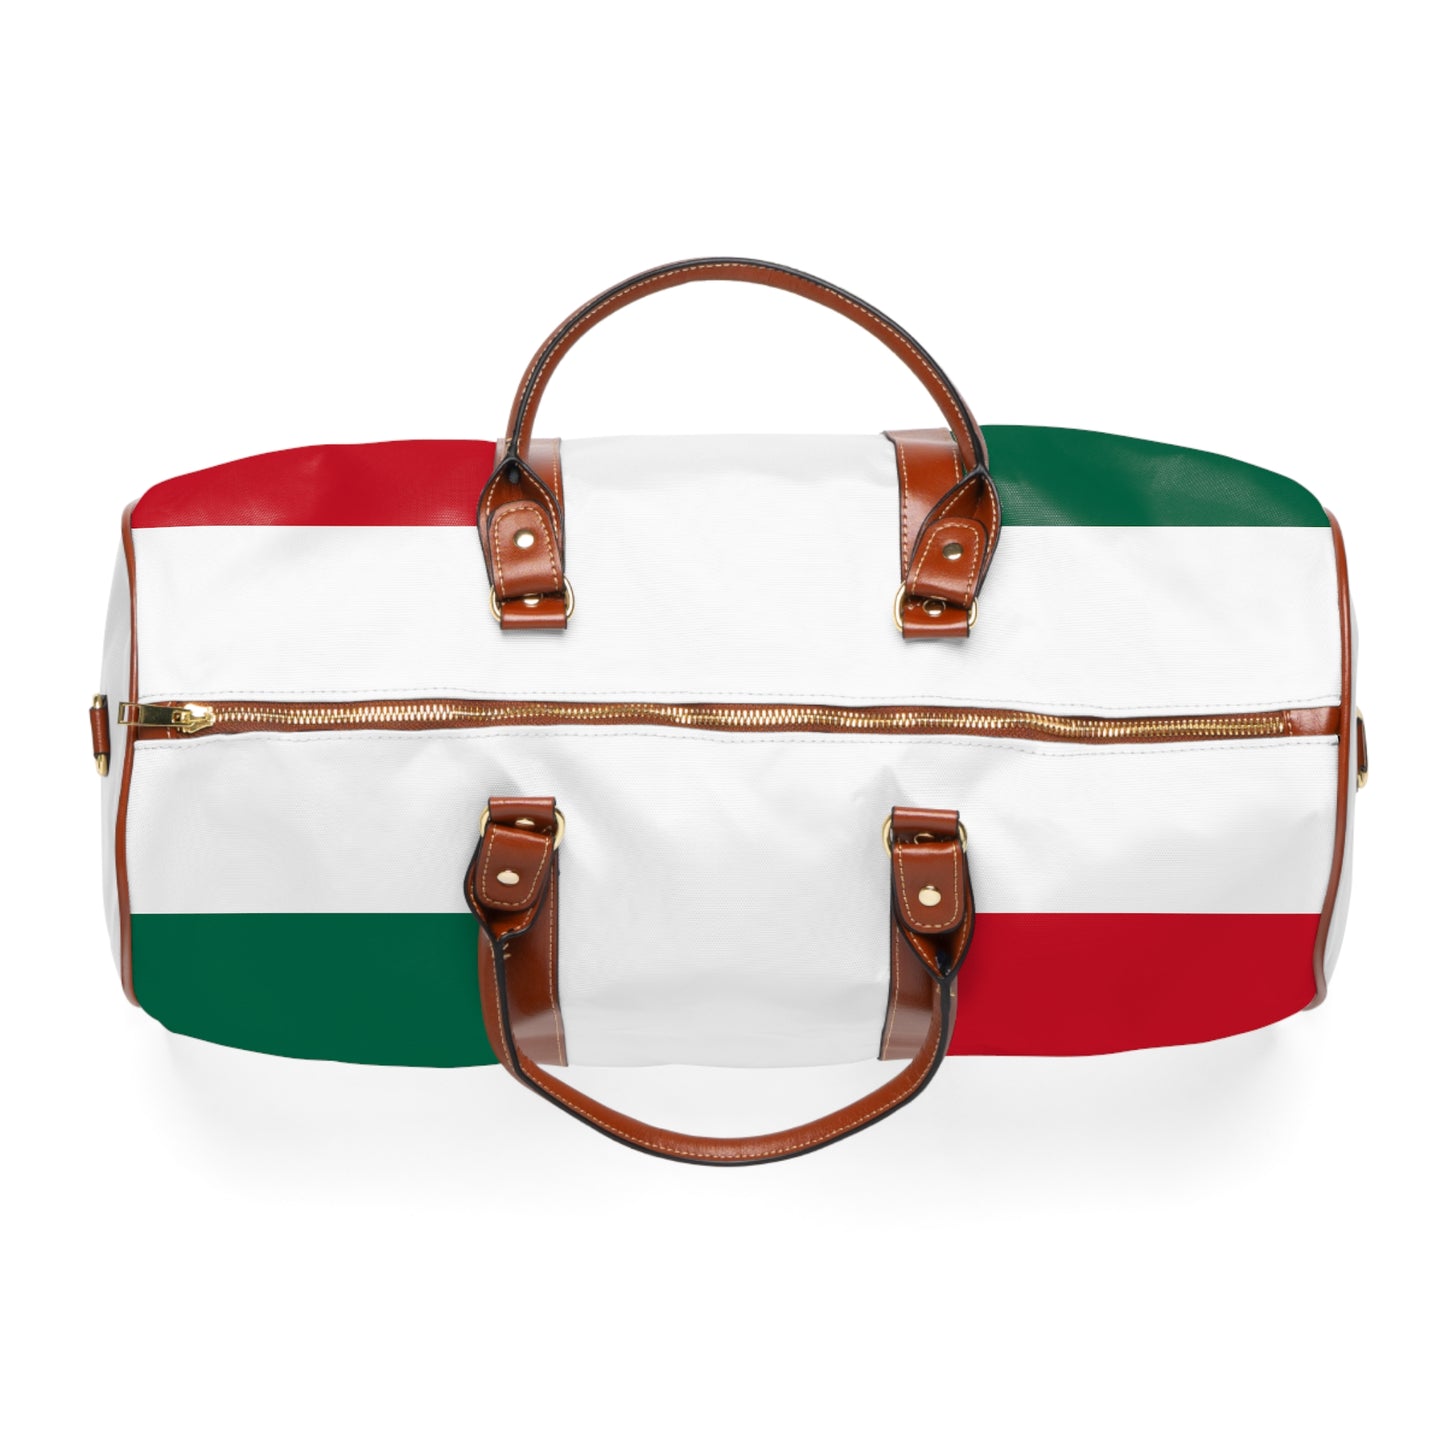 Mexican Flag Waterproof Travel Bag